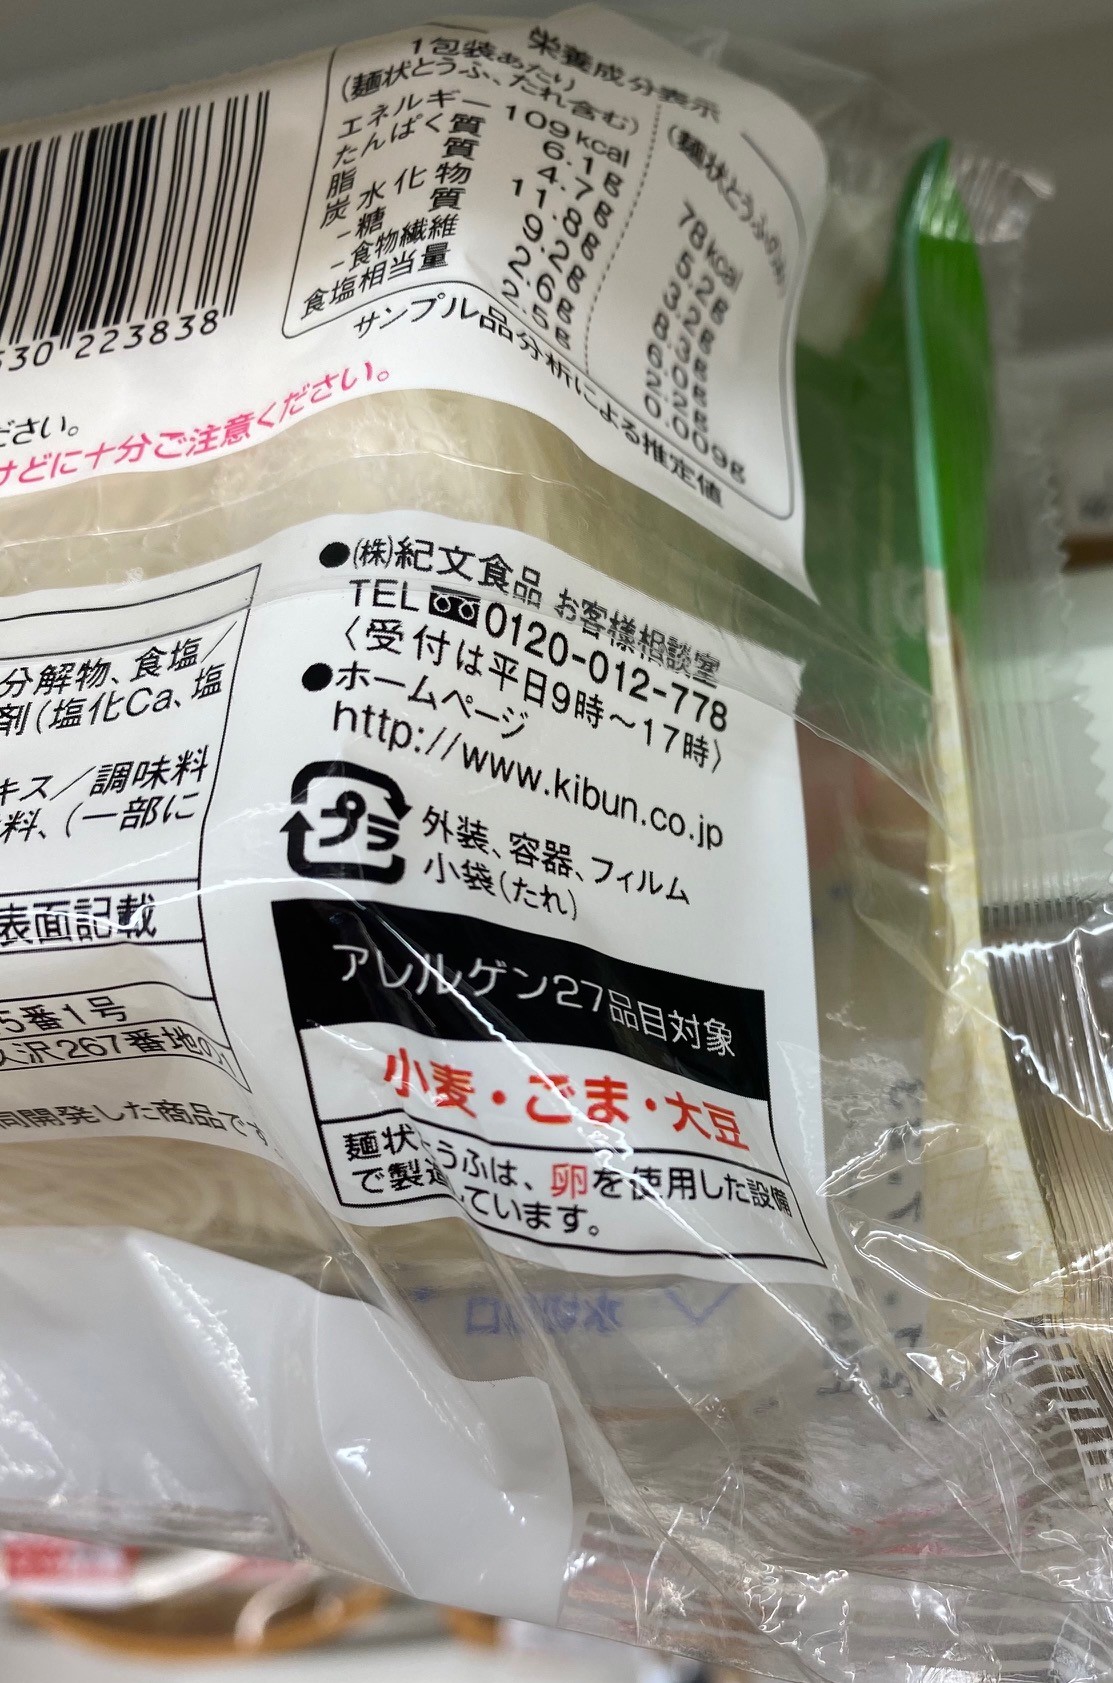 Family Mart, Mom’s Dining Room Kibun Tofu Noodles in Sesame Sauce, back of package allergy warning